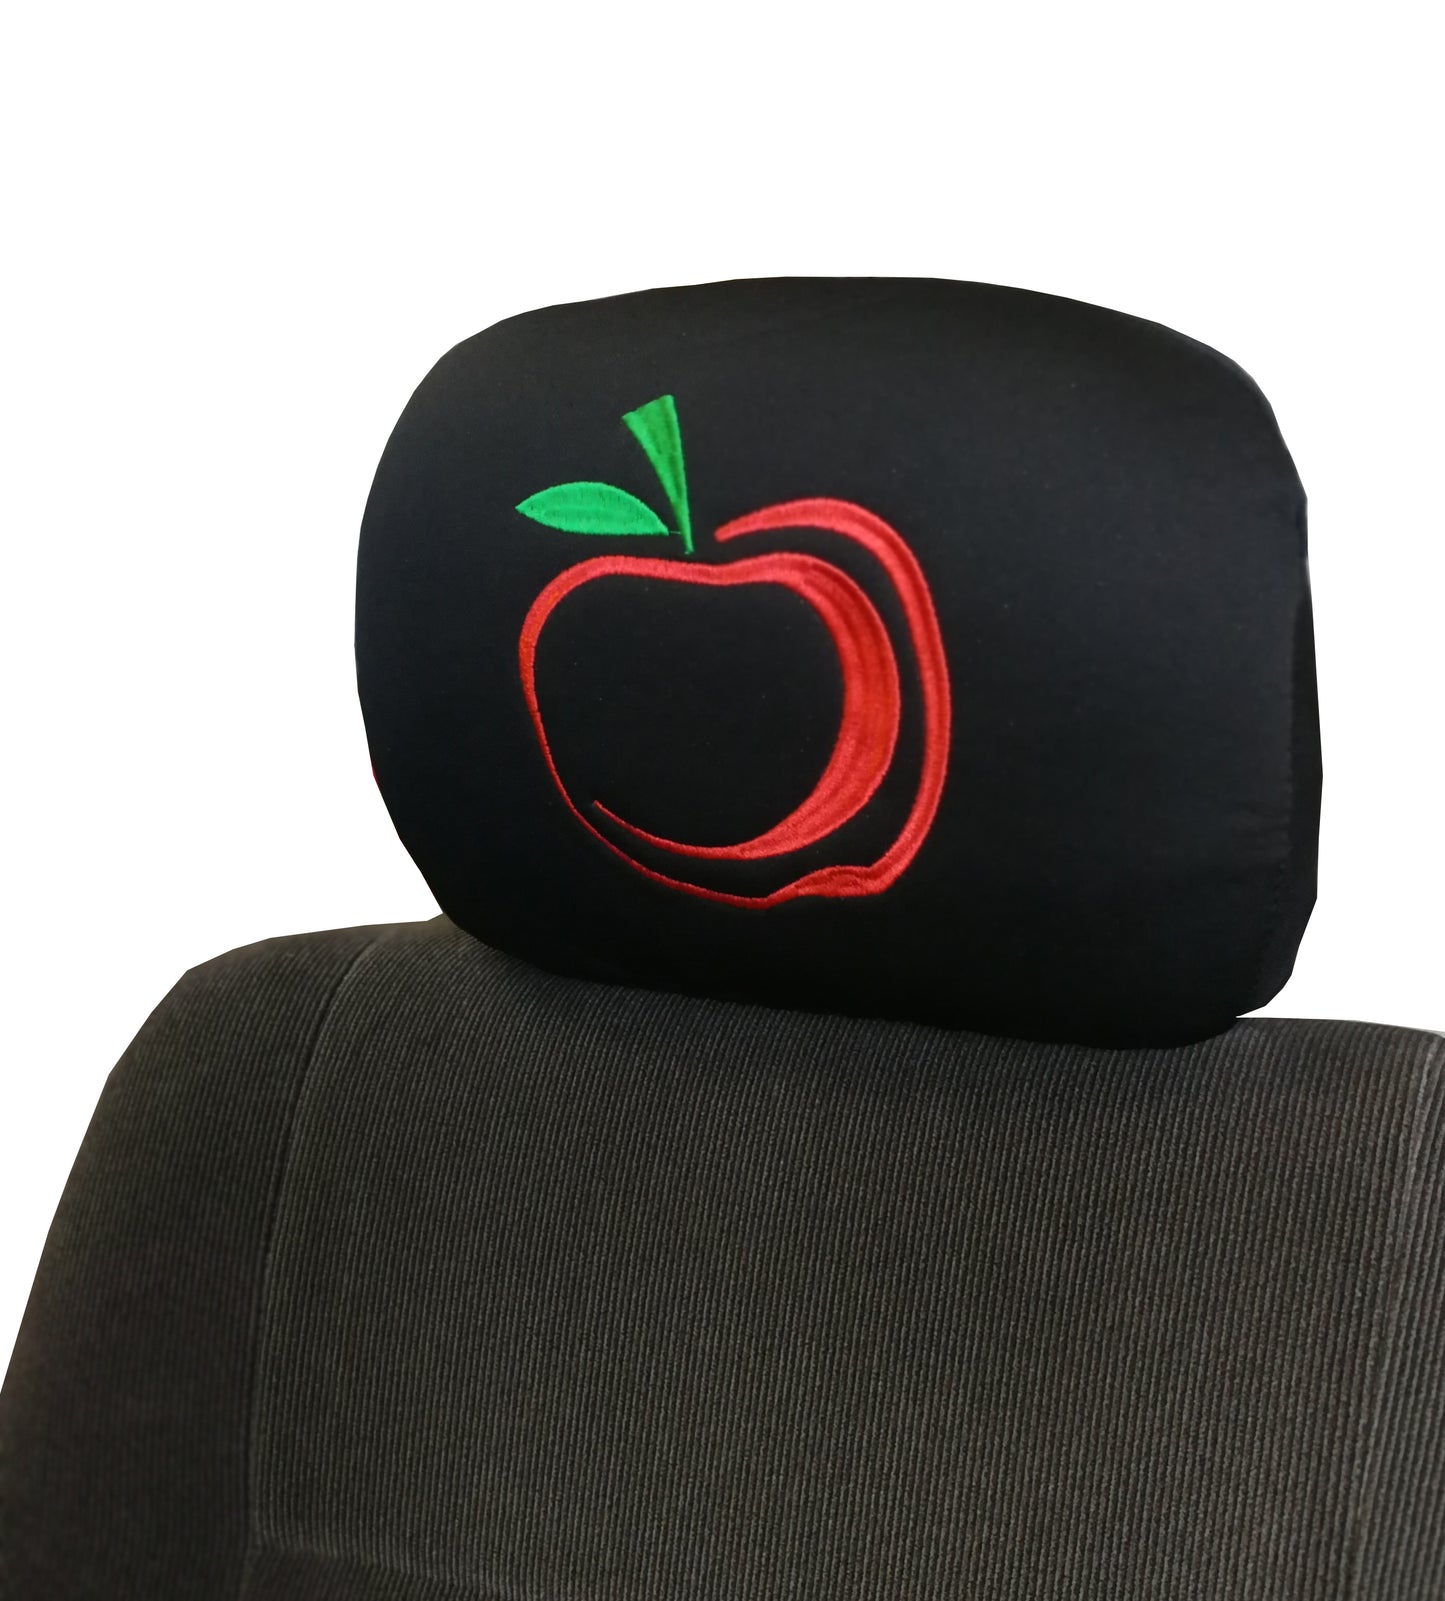 Embroidery Red Apple Logo Design Auto Truck SUV Car Seat Headrest Cover Accessory 1 Piece - Yupbizauto